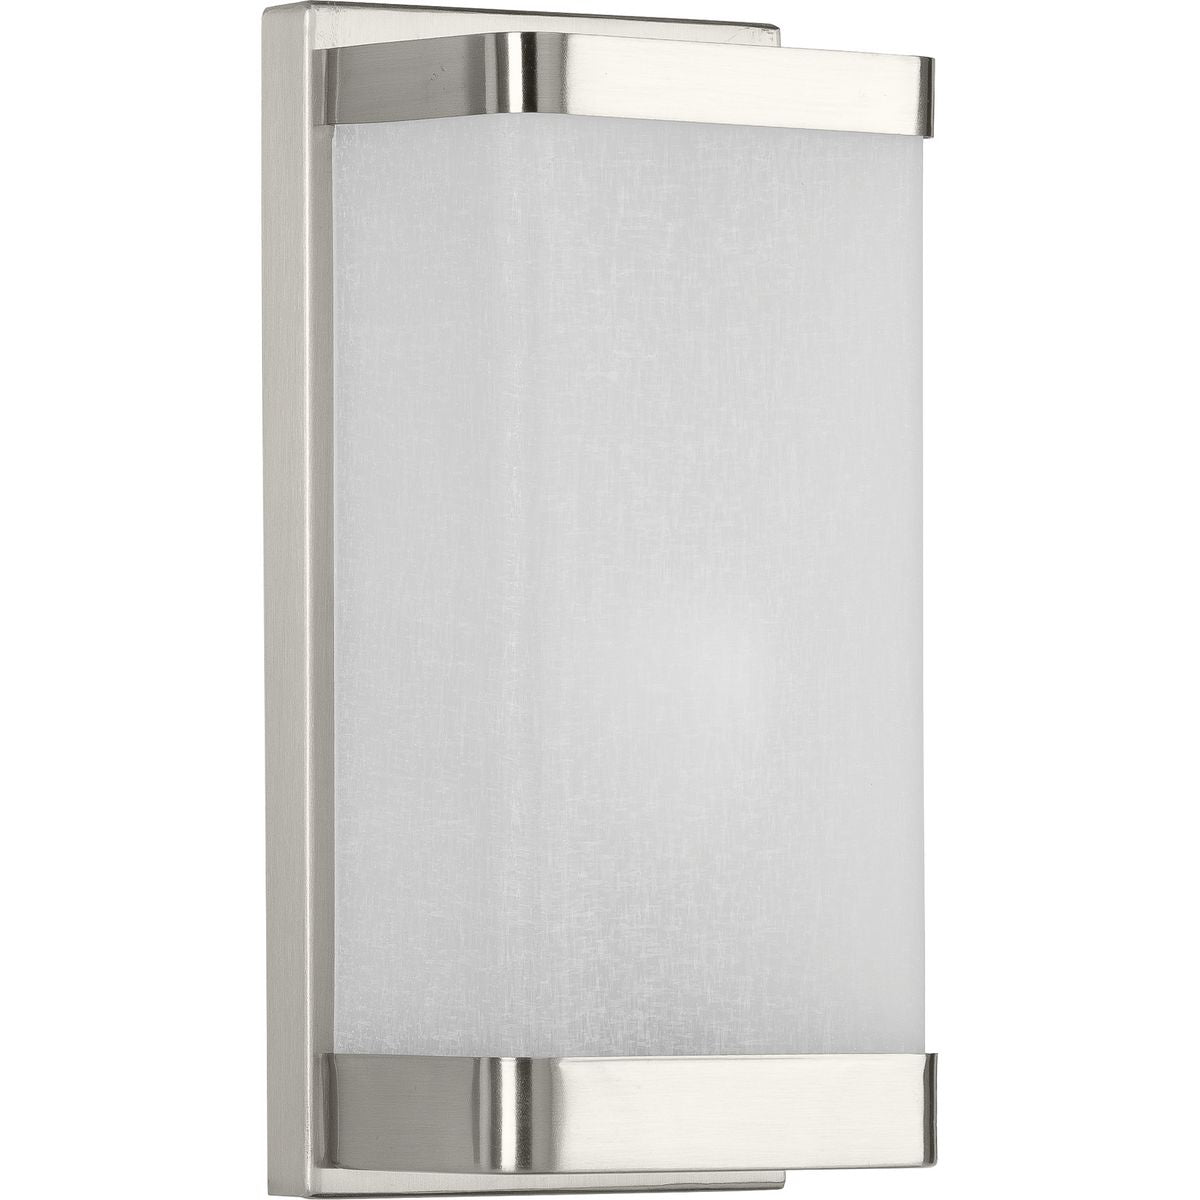 PROGRESS LIGHTING P710072-009 Brushed Nickel One-Light Linen Glass Wall Sconce